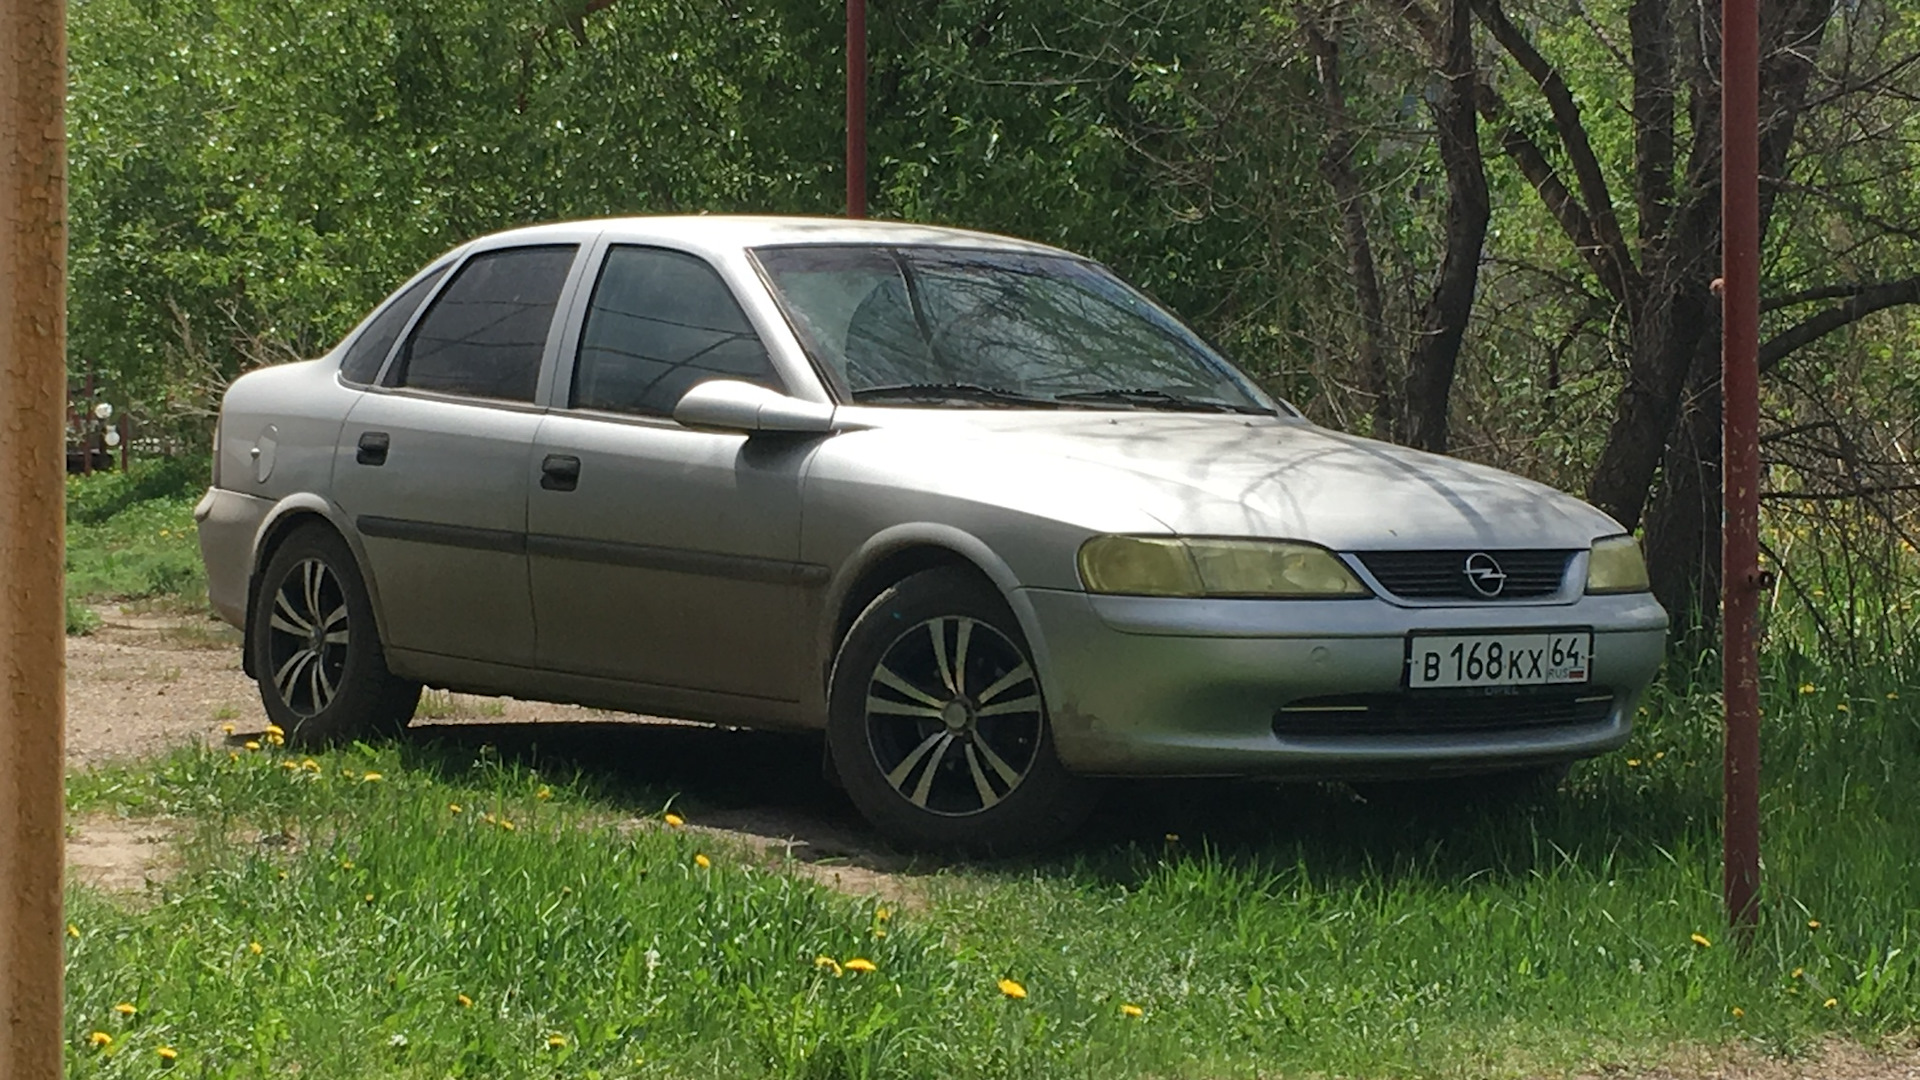 Опель вектра б 1998г. Опель Вектра 1998. Opel Vectra 1998 колеса. Опель Вектра б 1998. Opel Vectra 1.6 МТ, 1998.